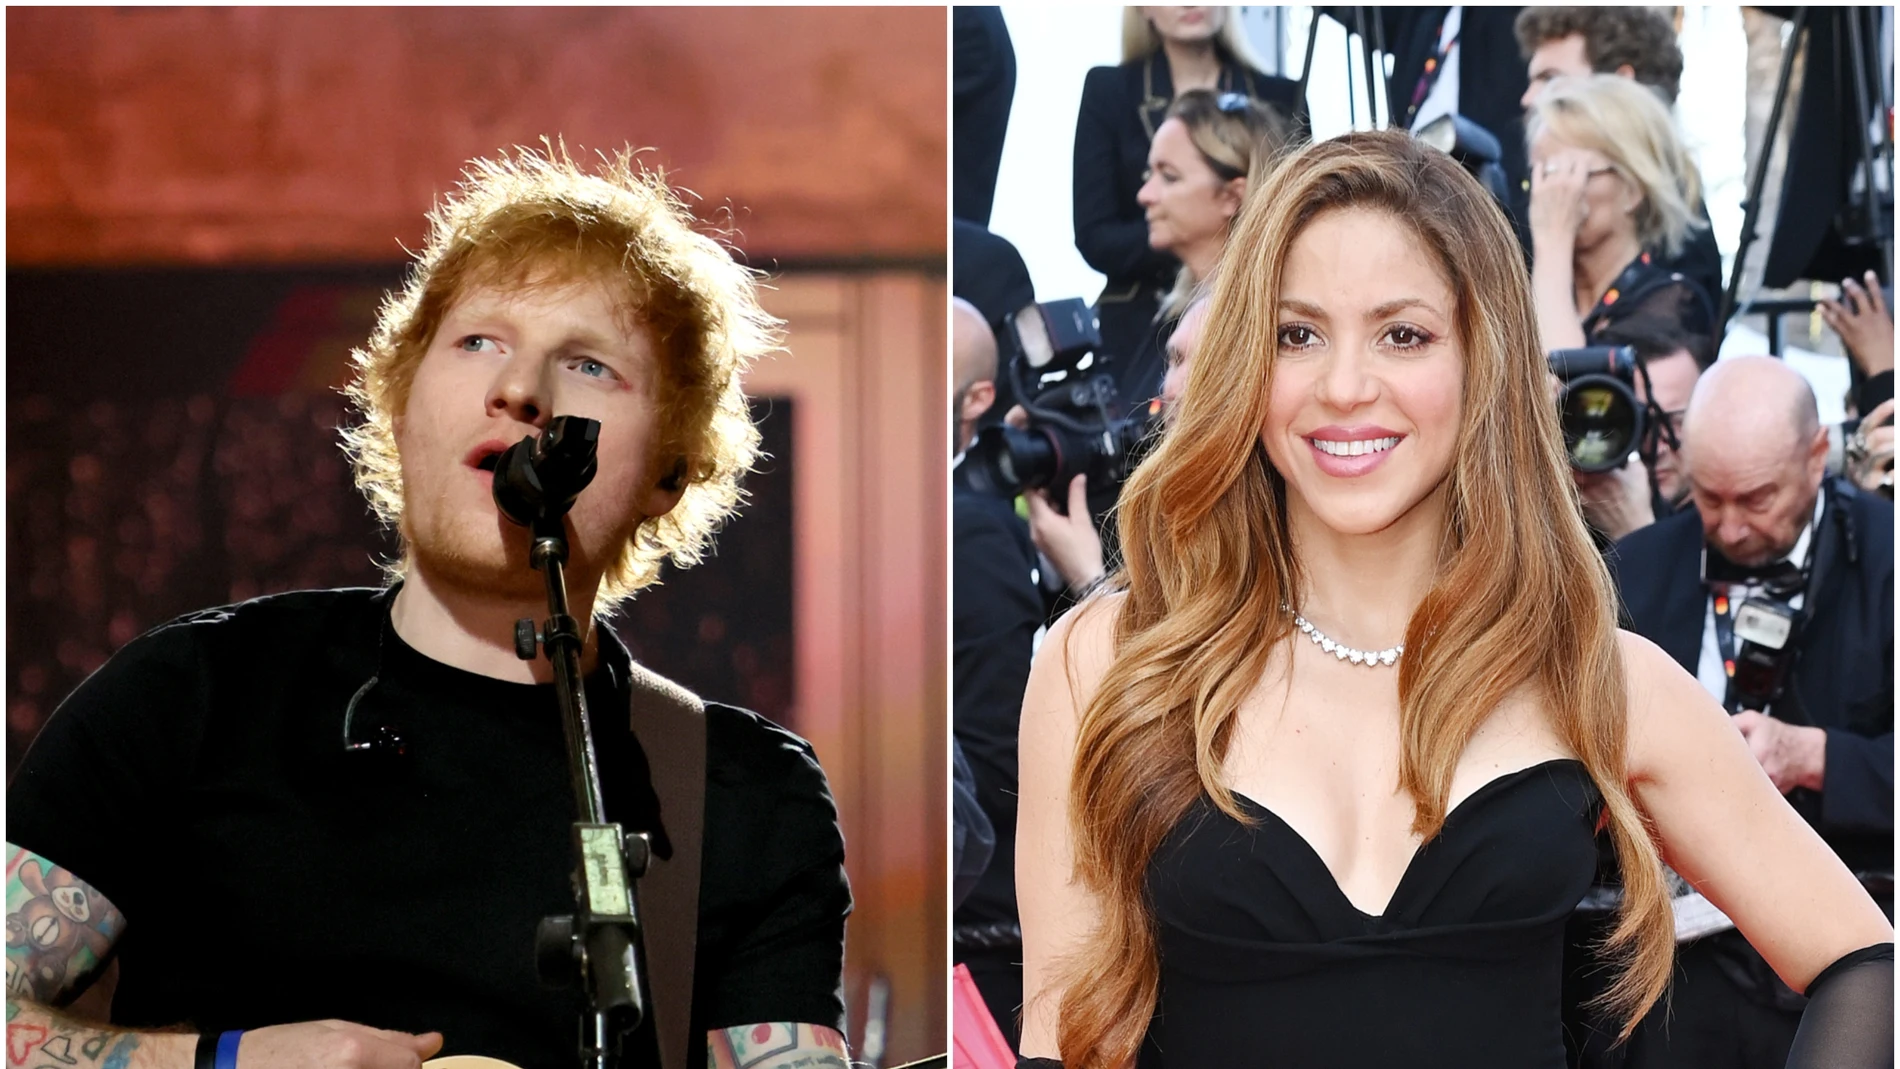 Ed Sheeran y Shakira